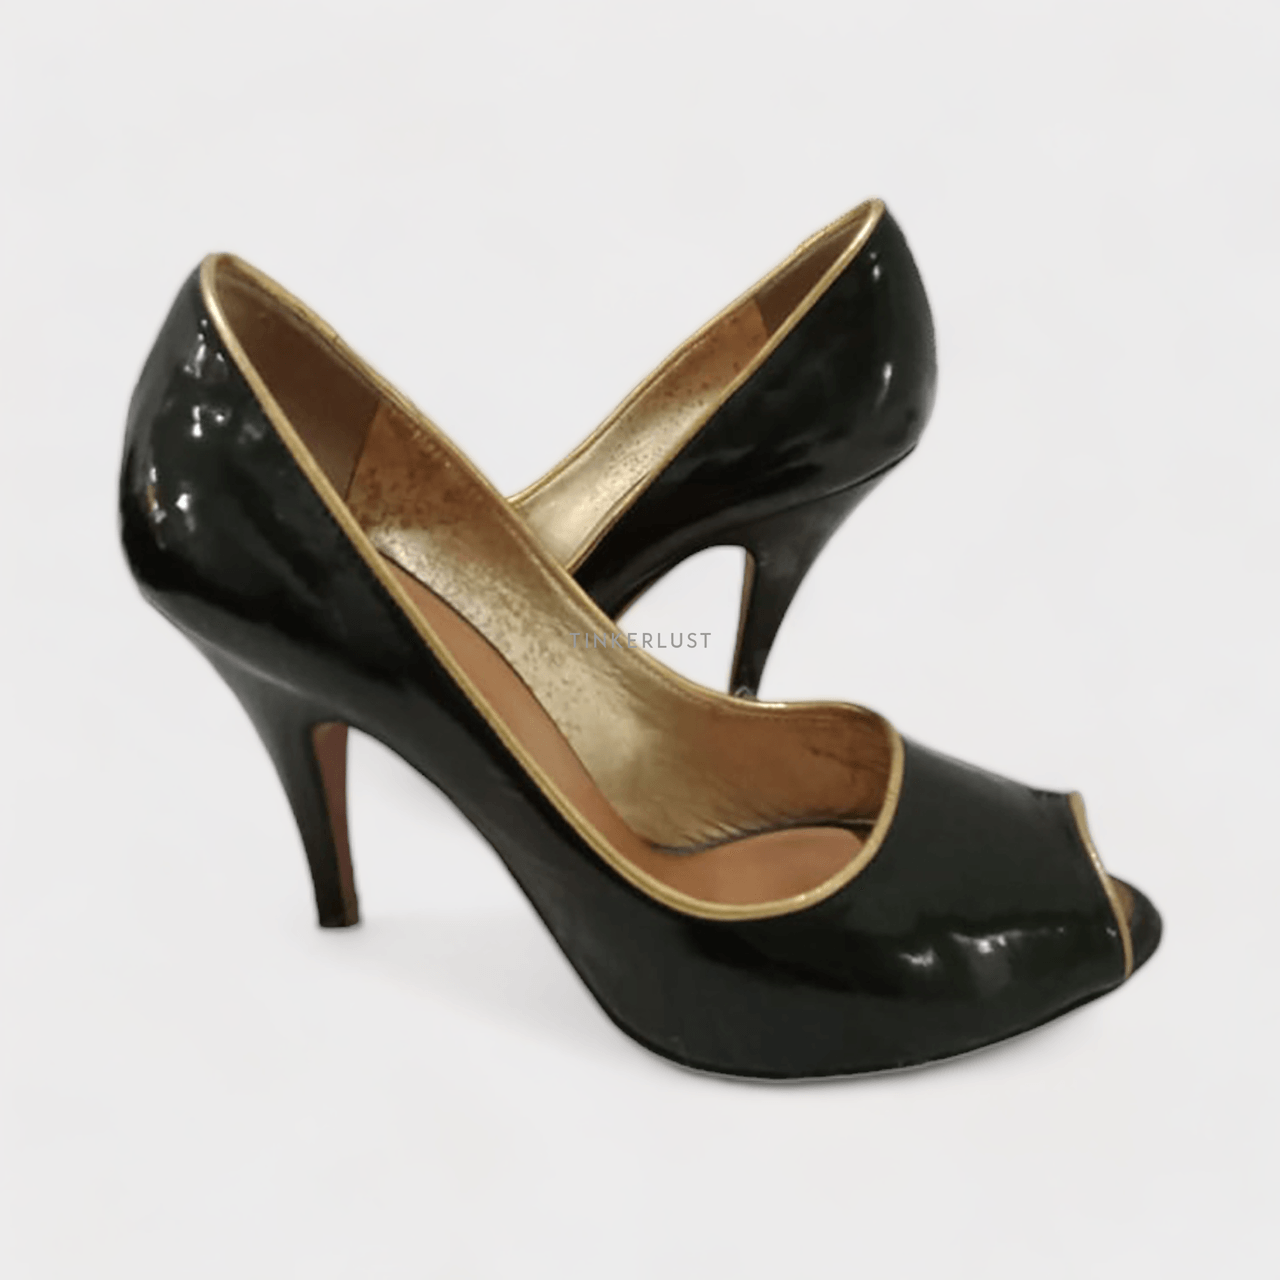 Giuseppe Zanotti Peep Toe Black Patent Leather Pump Heels